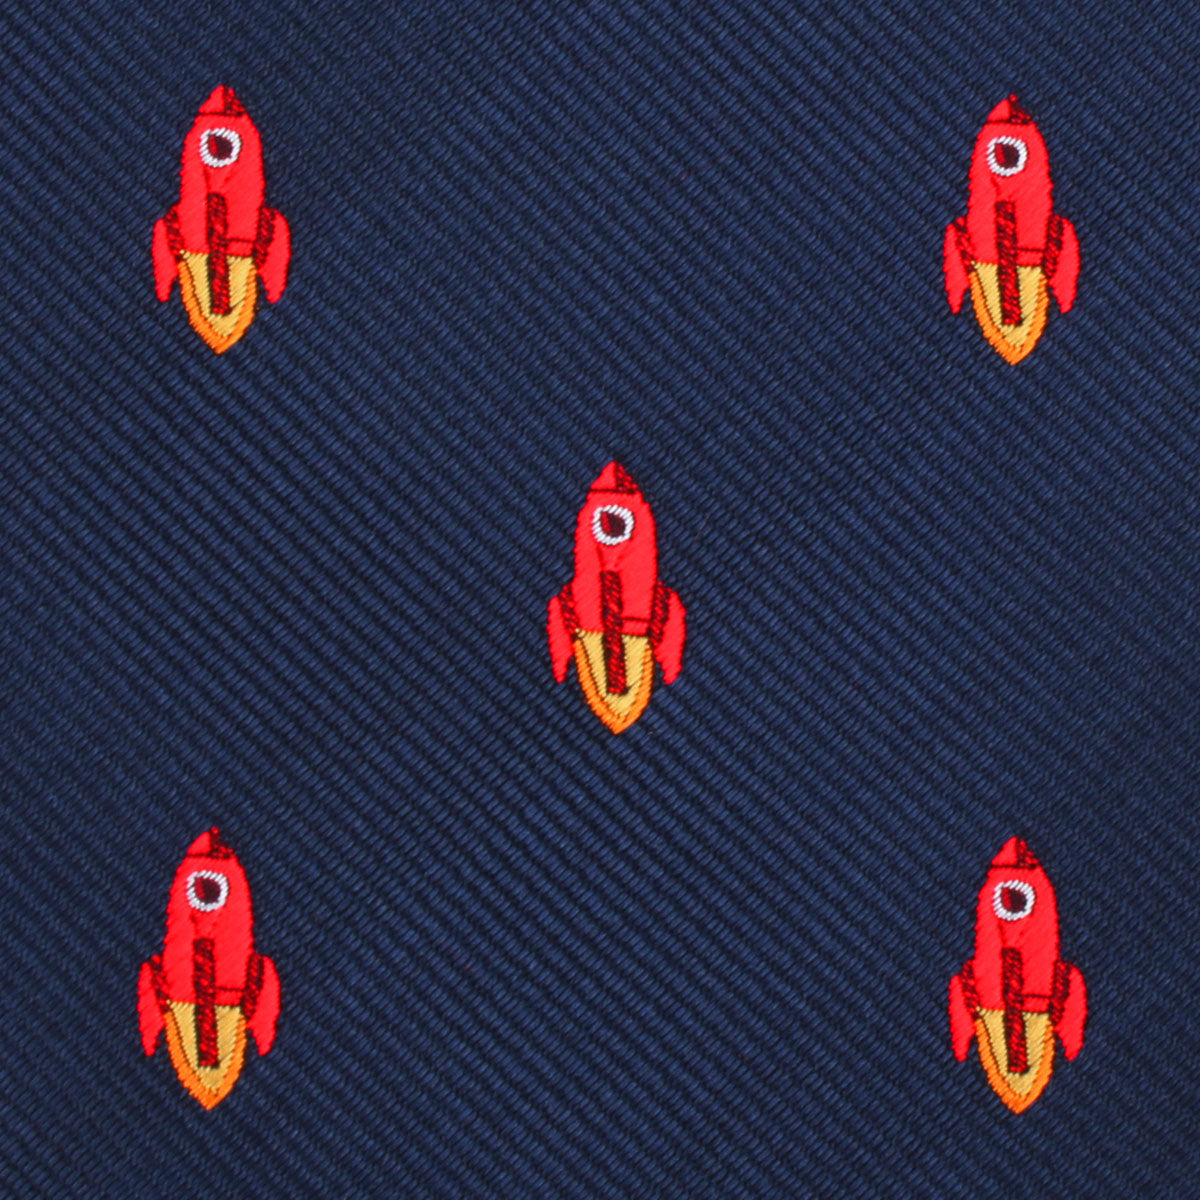 Saturn Red Rocket Pocket Square Fabric